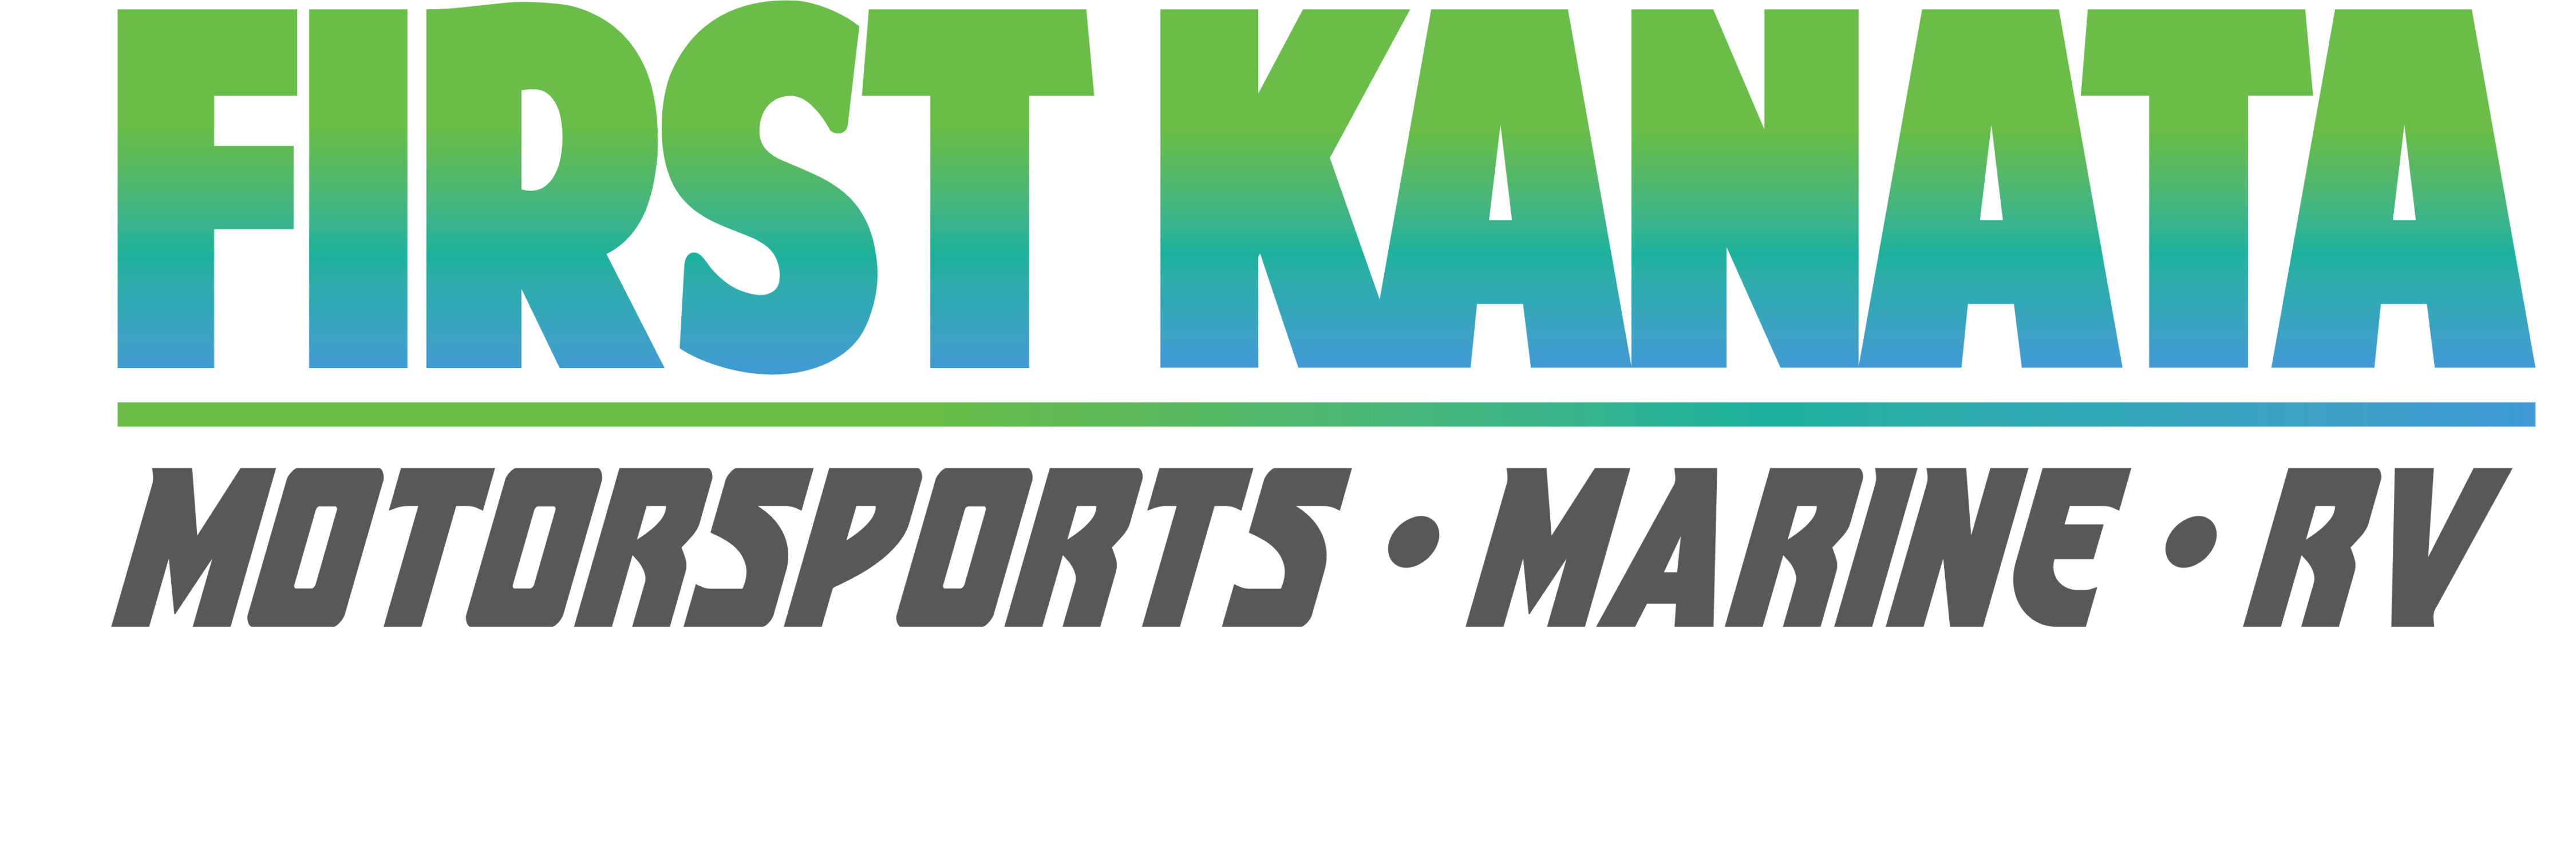 First Kanata Motorsports Marine RV